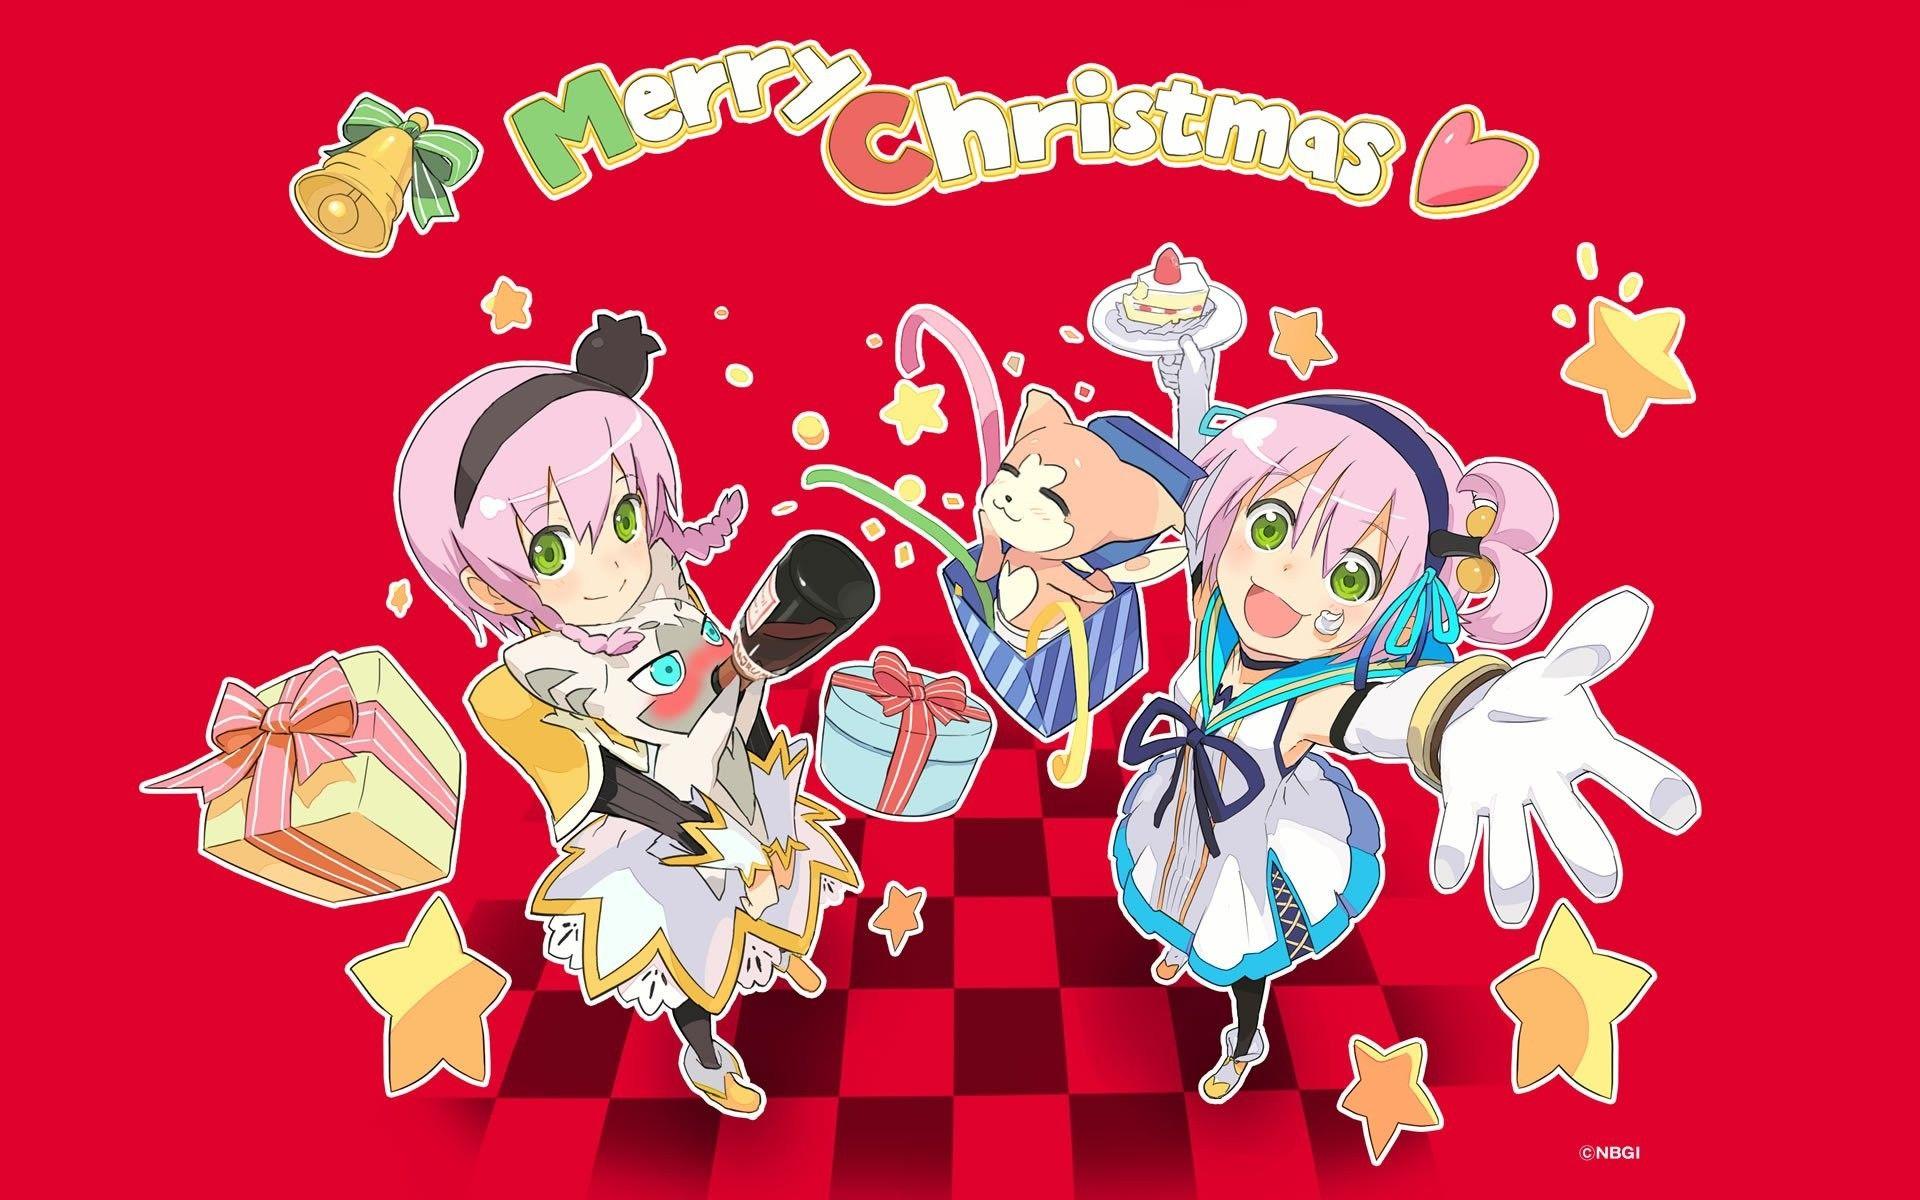 Anime Christmas wallpaper.com